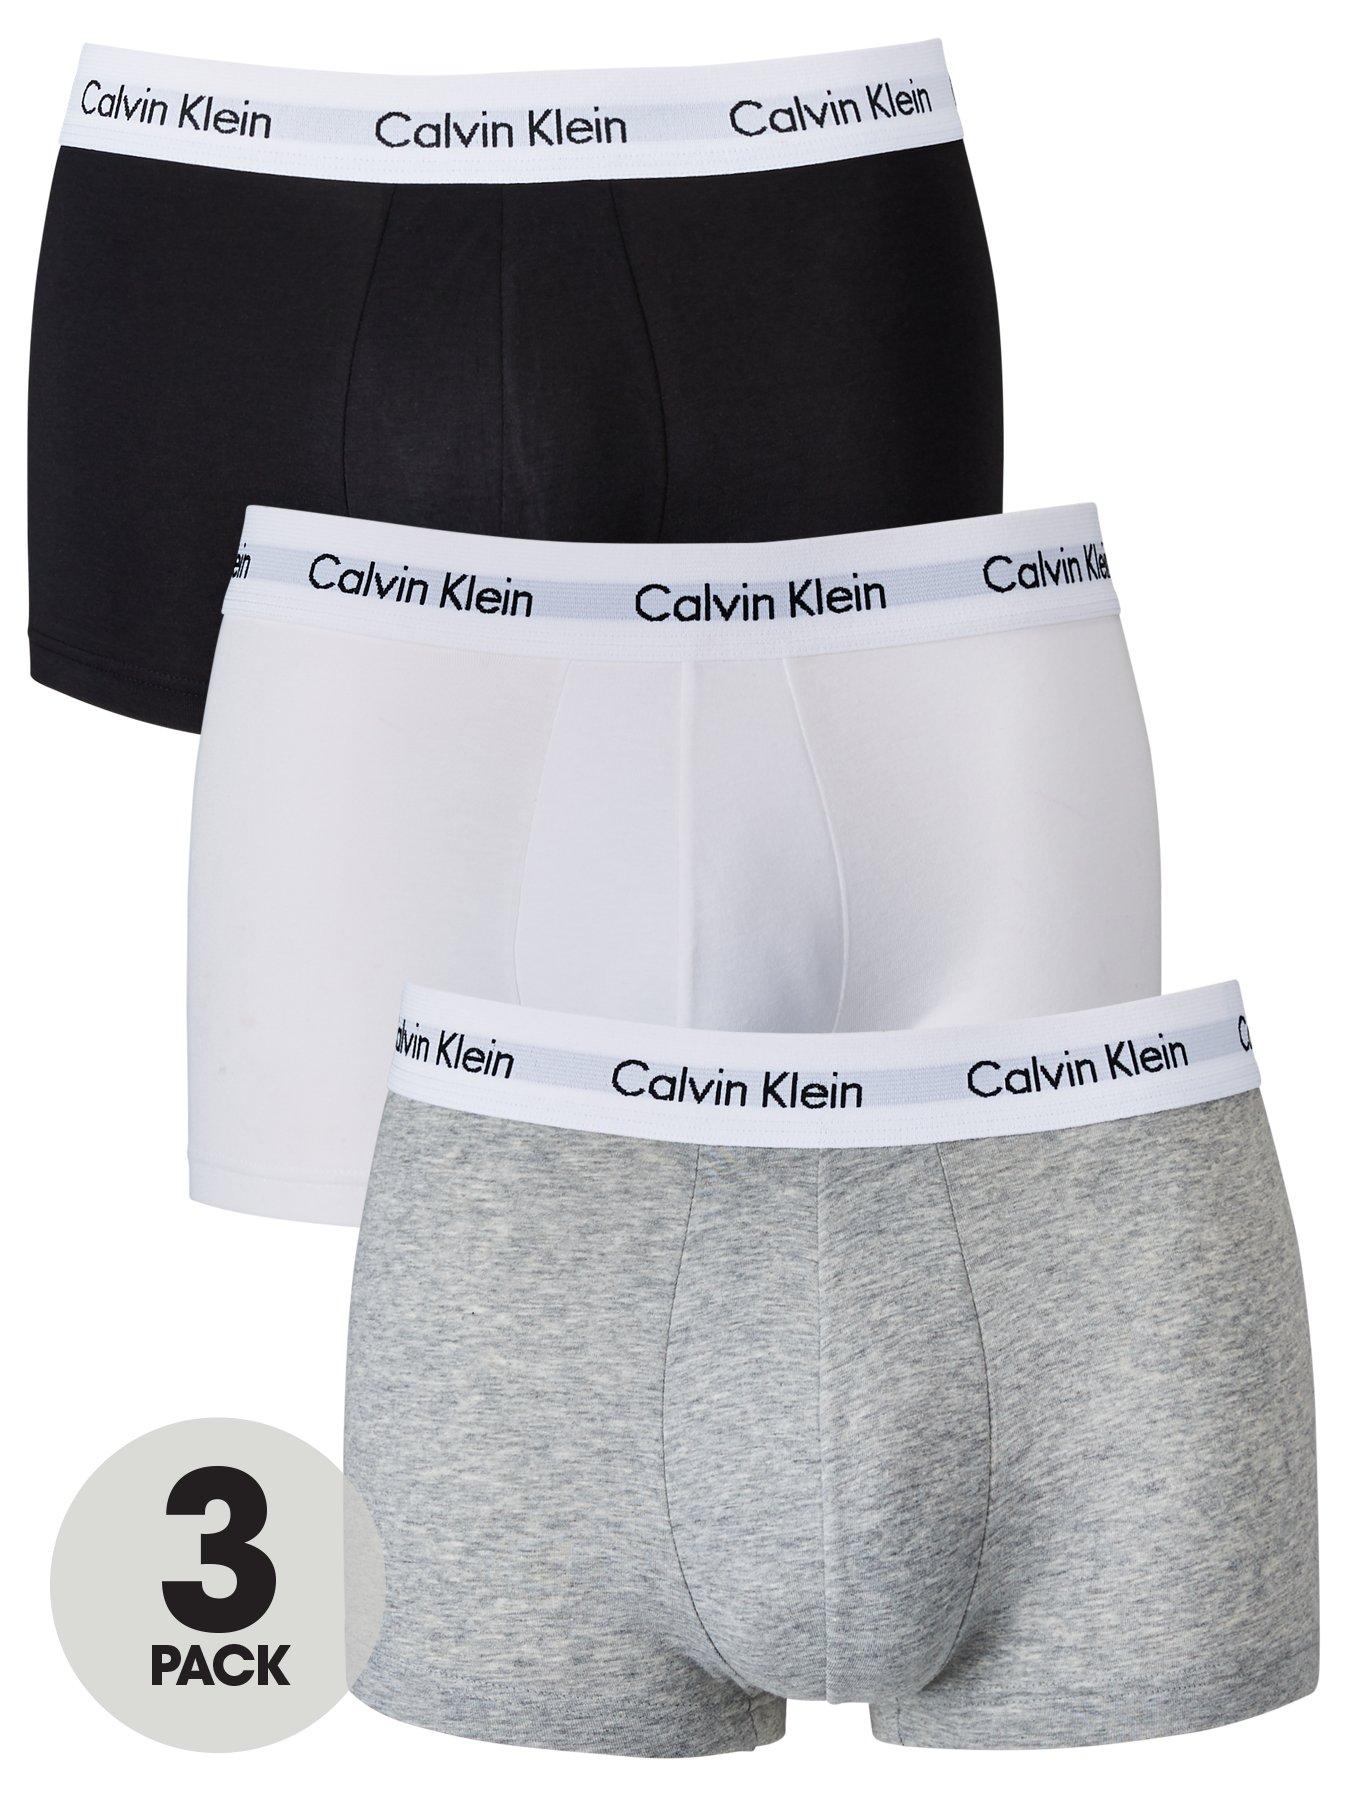 CALVIN KLEIN MENS 3 PACK HIPSTER BRIEF WHITE - Brands Megastore